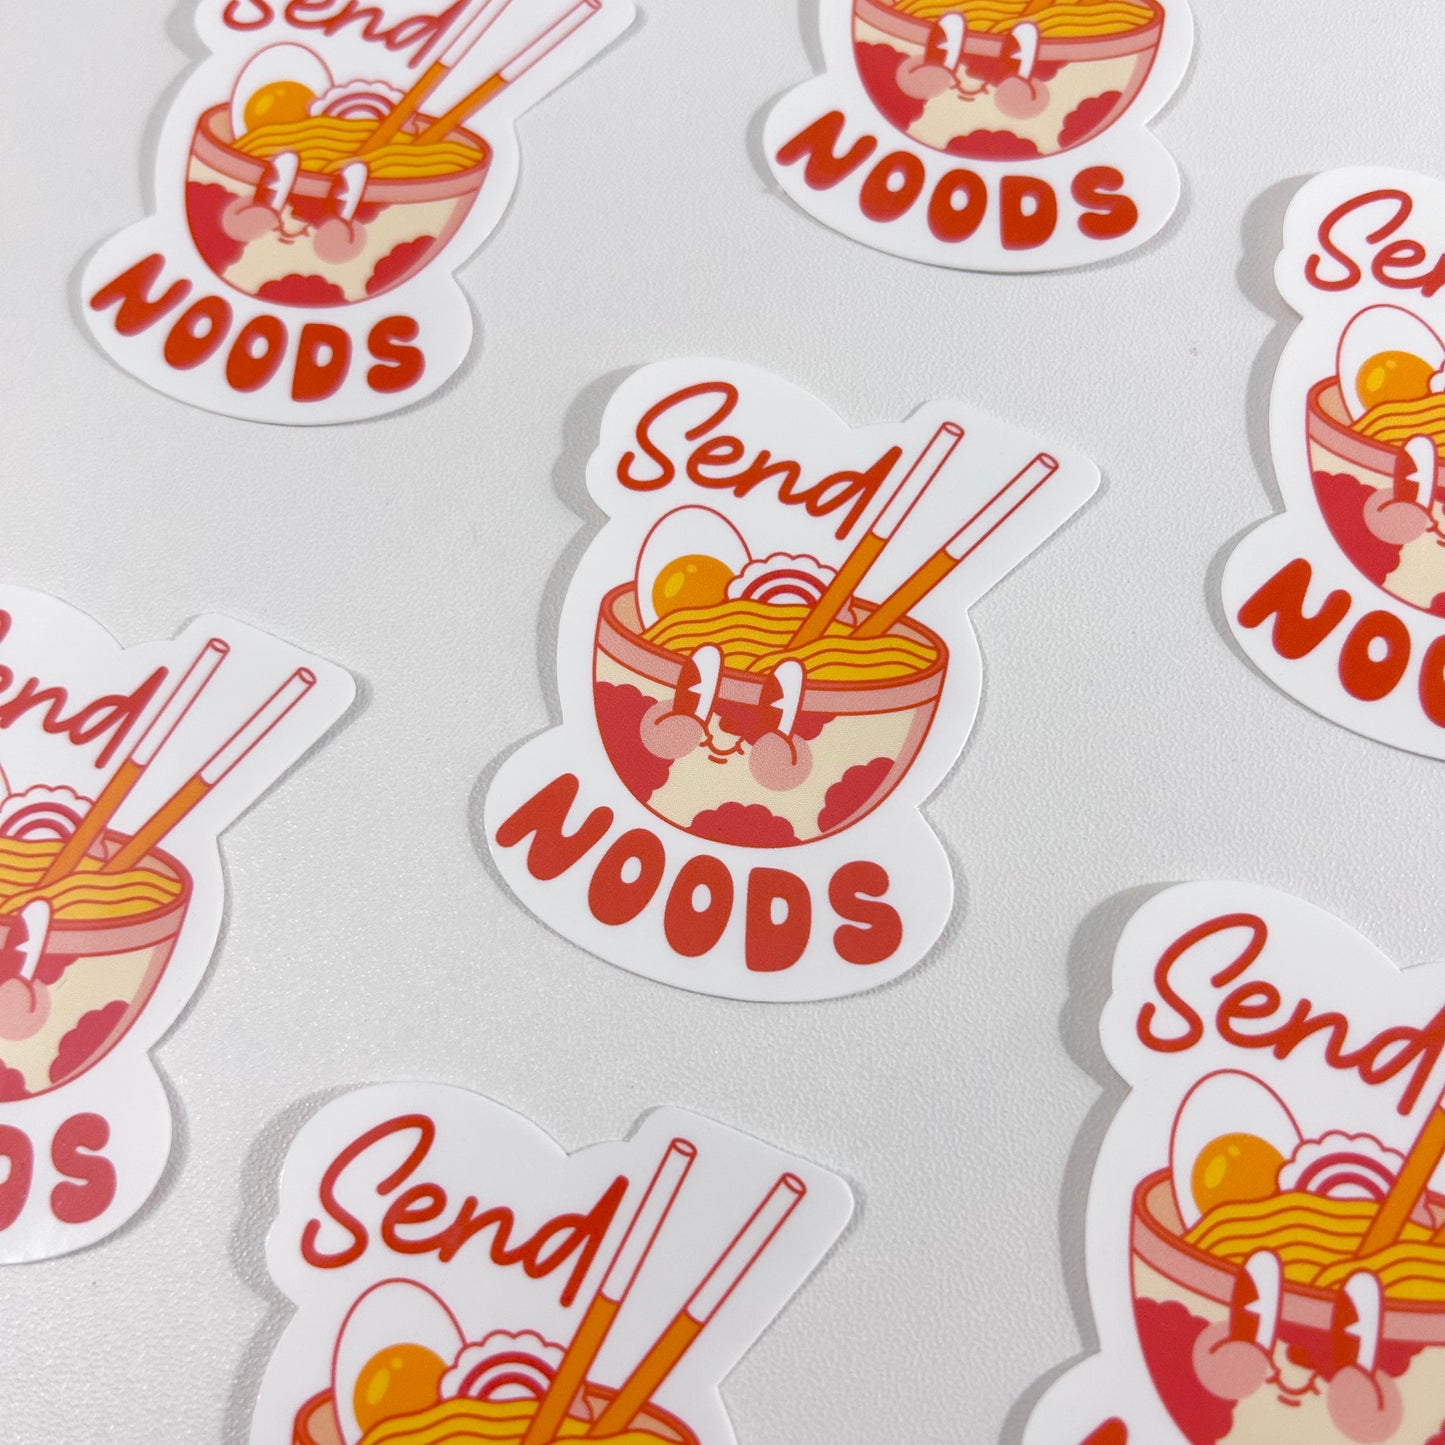 Send Noods Sticker - Pasta Pun